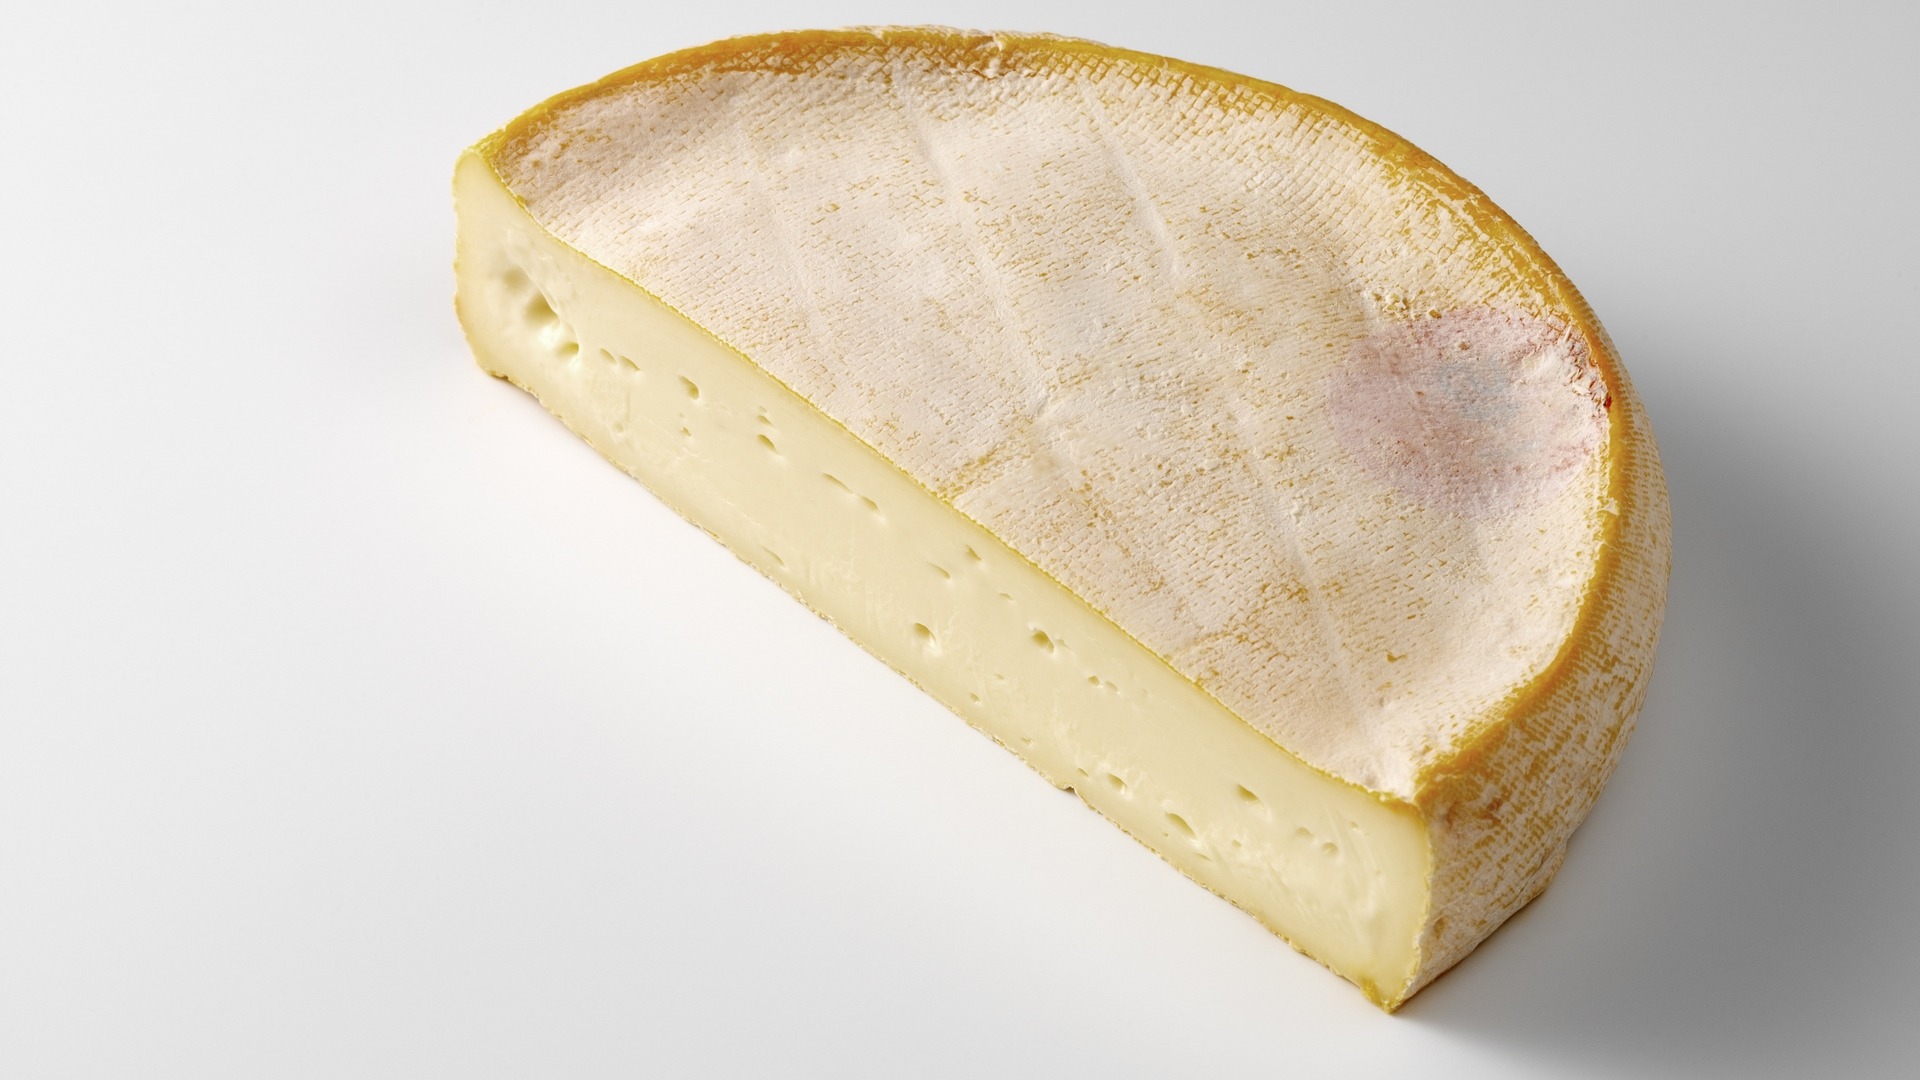 reblochon, alpine, french, cows milk, cheese